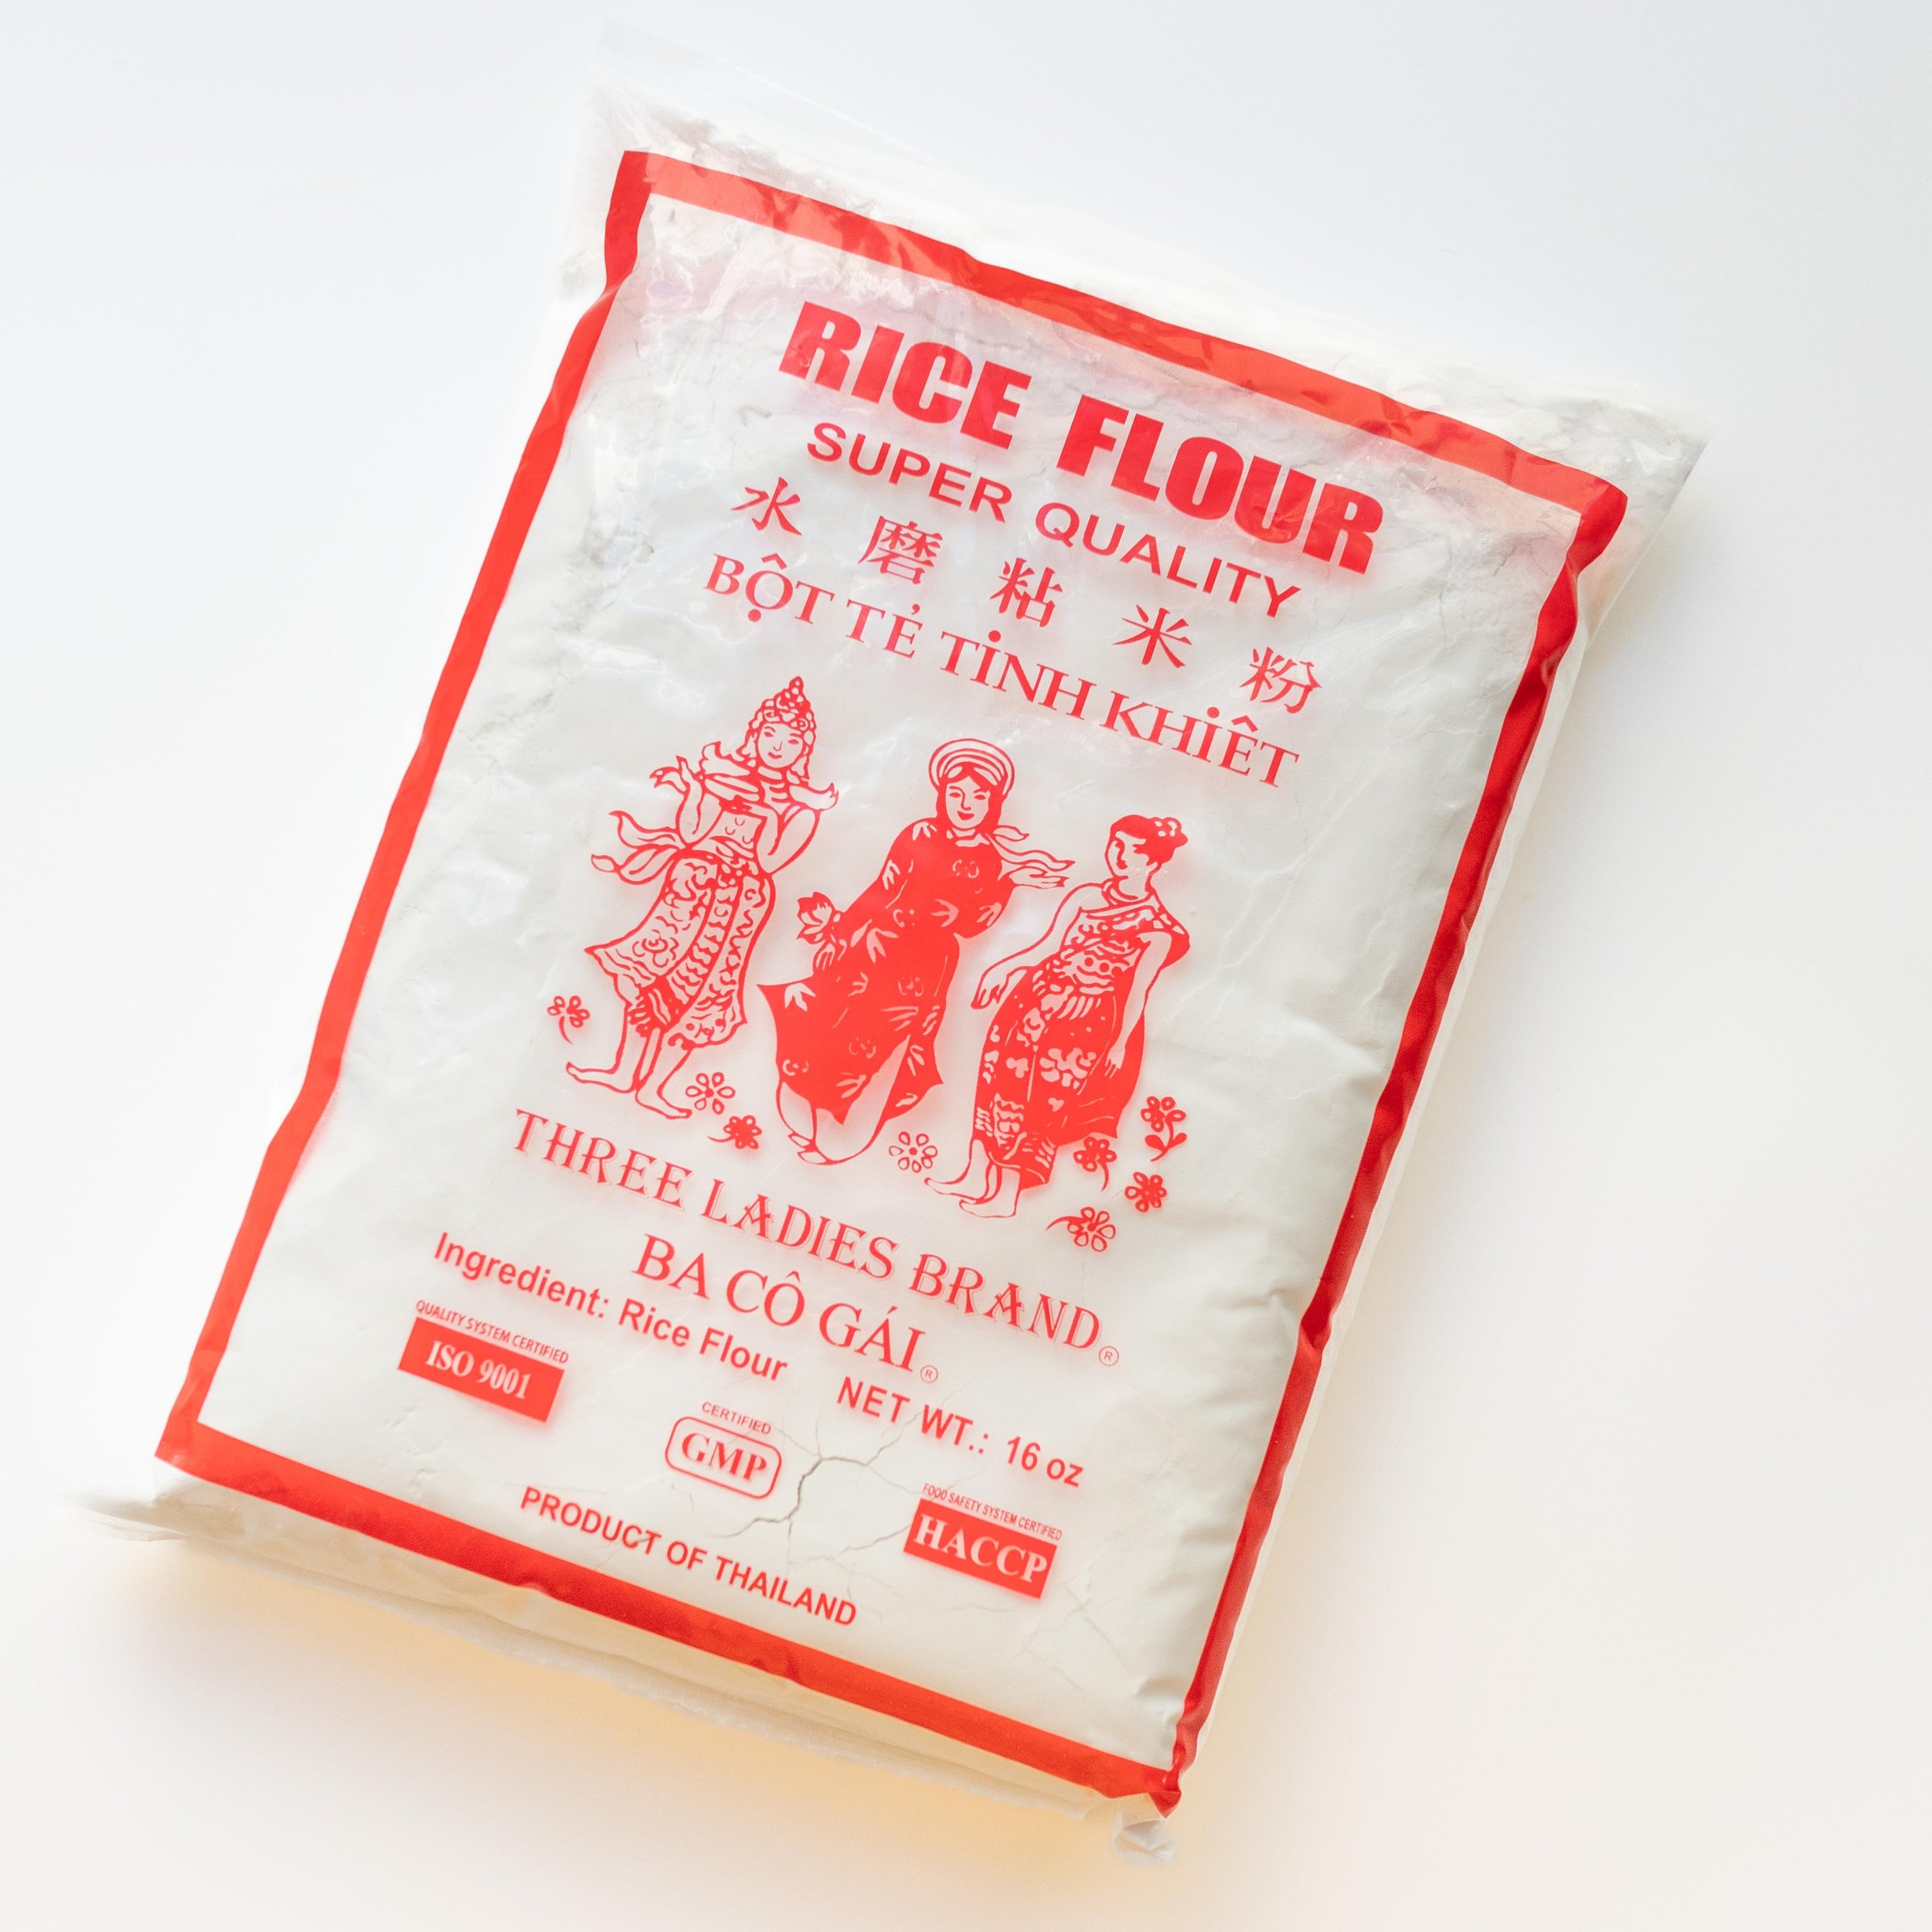 Three Ladies Brand Rice Flour